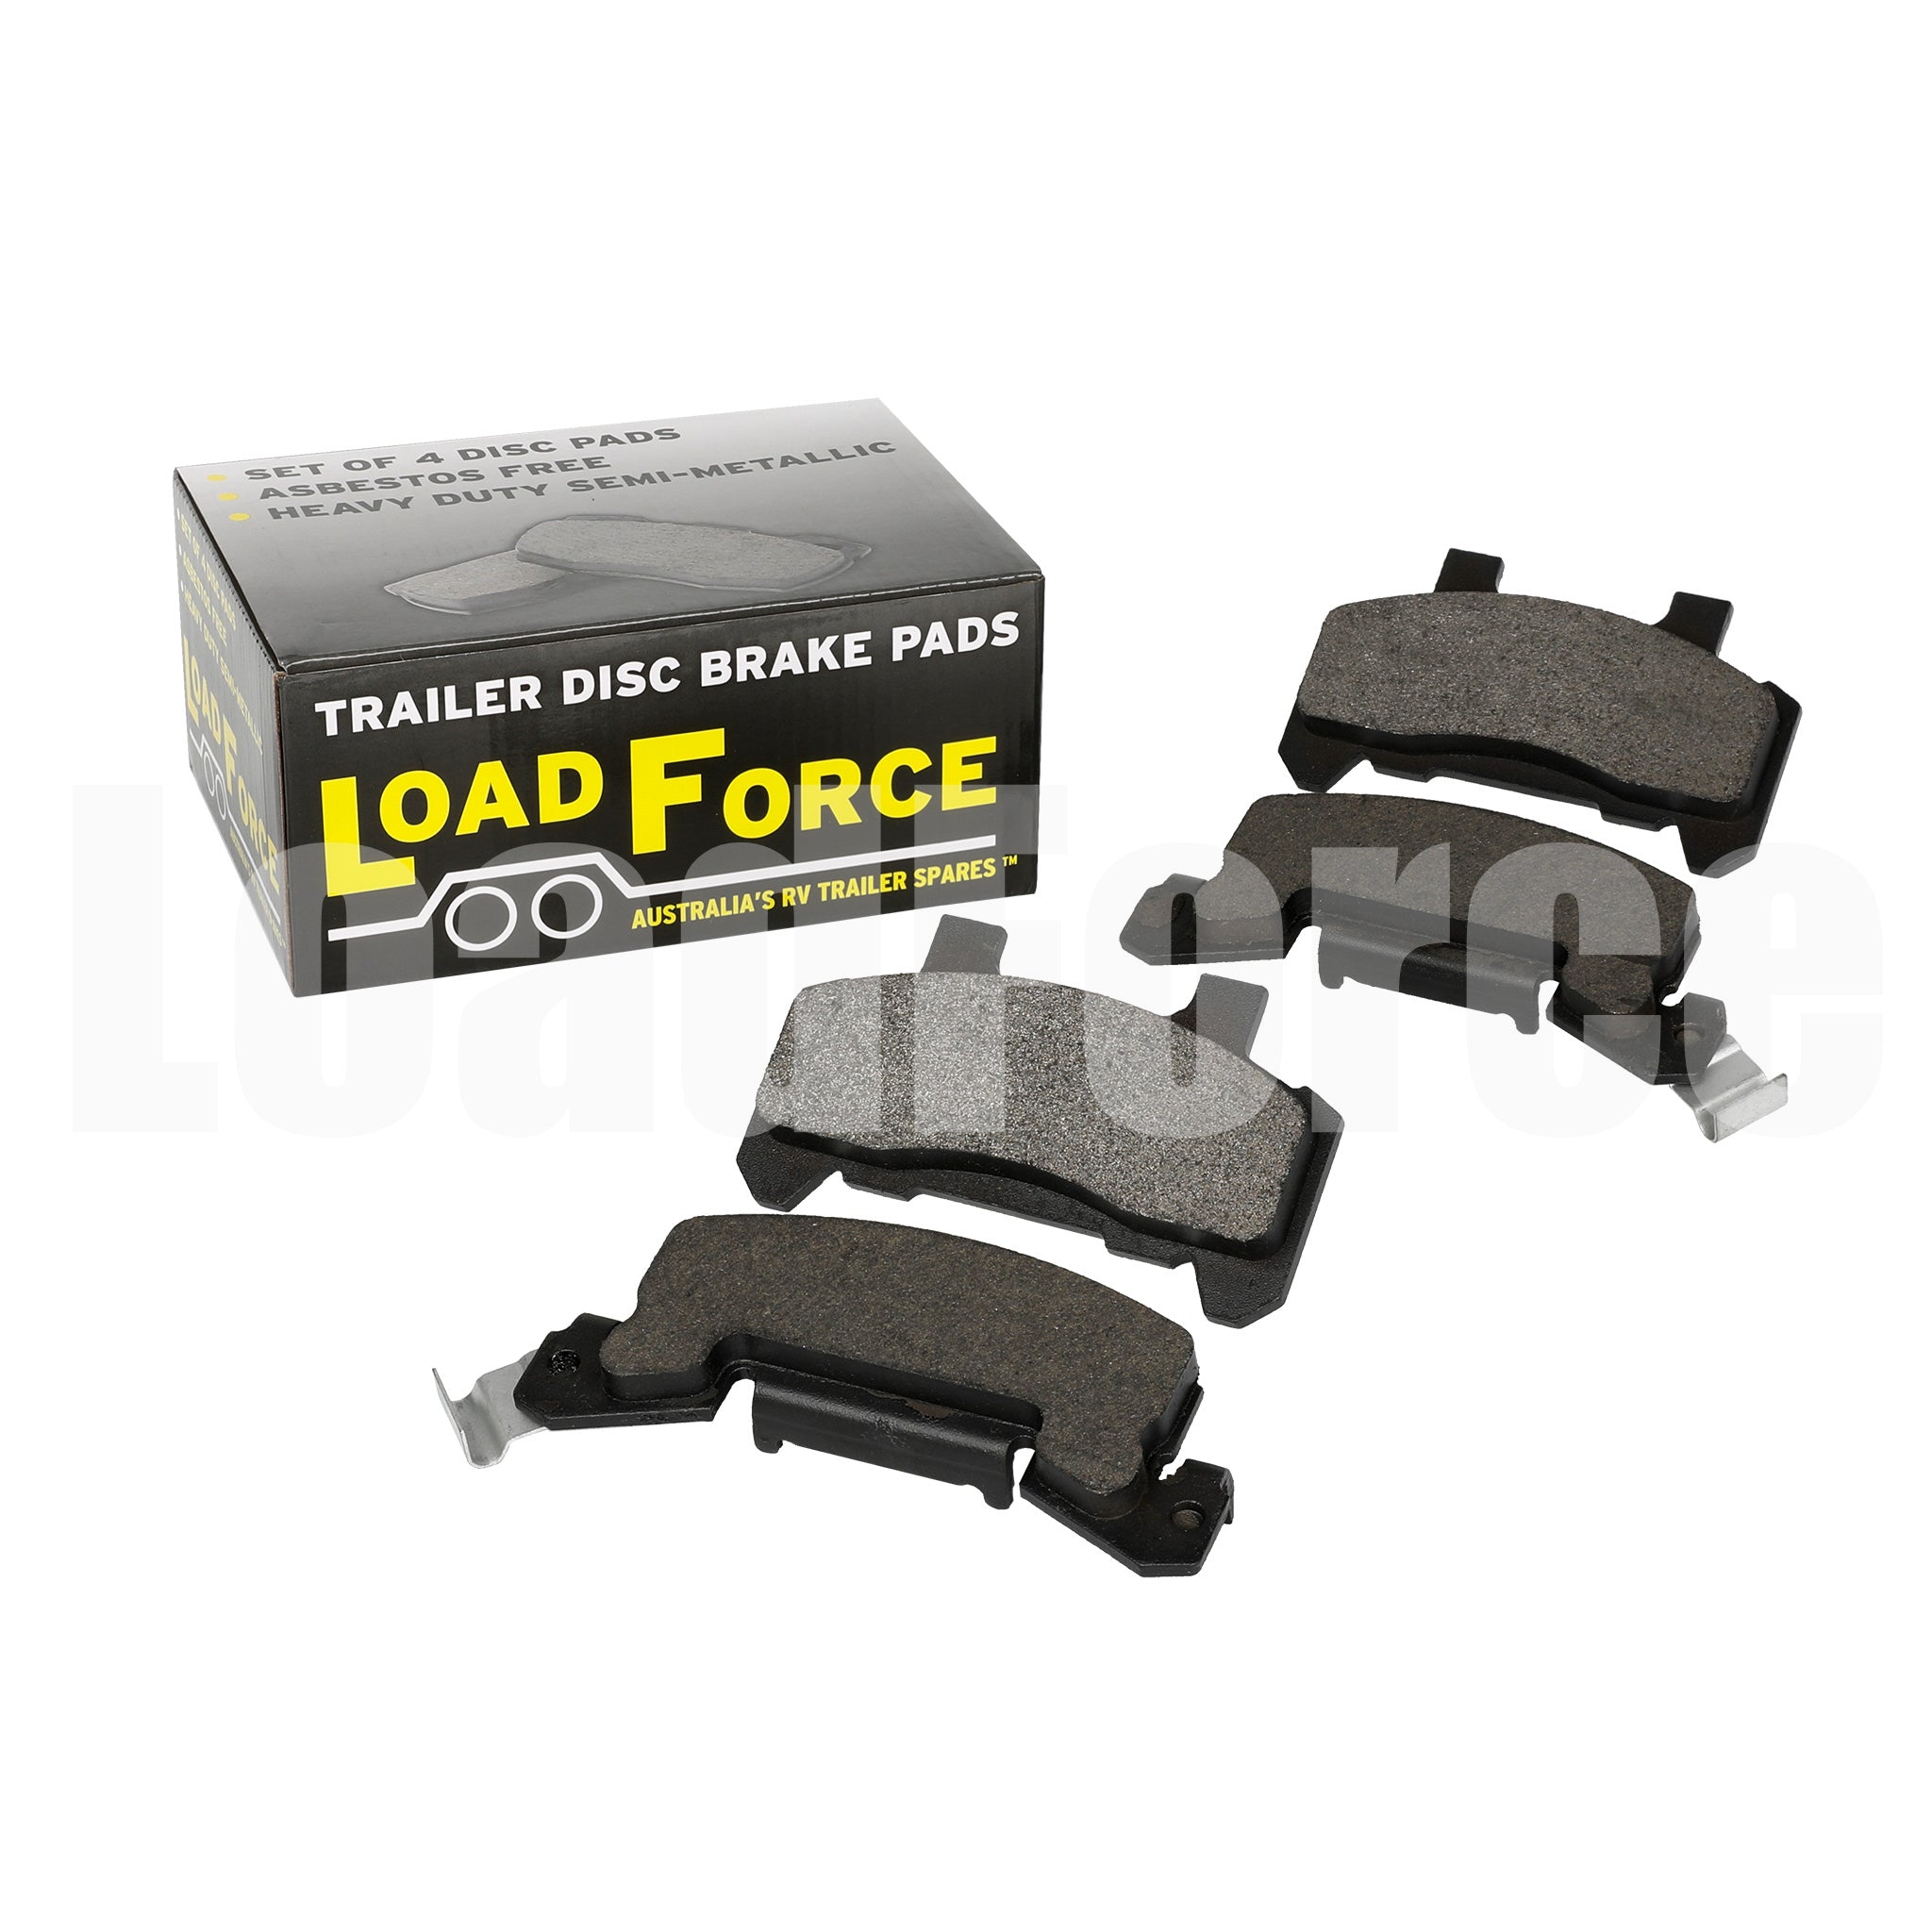 LoadForce disc brake pad set for Kodiak 225